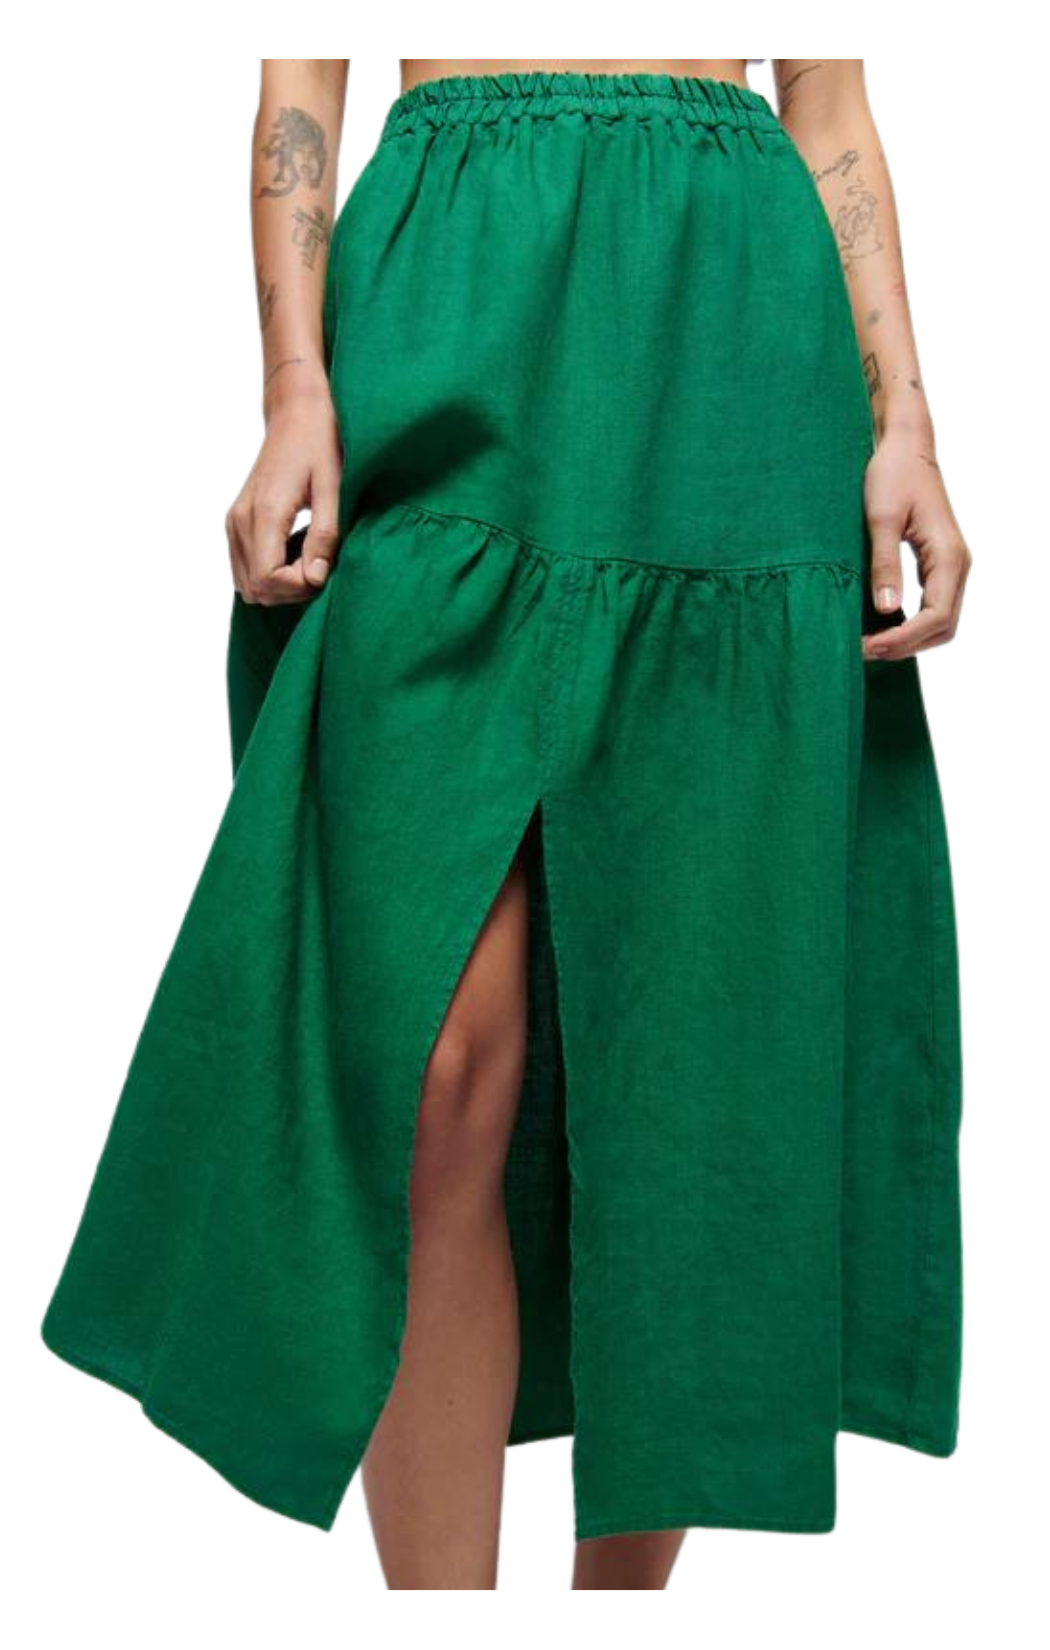 The Esmeralda Skirt by Nation LTD Green